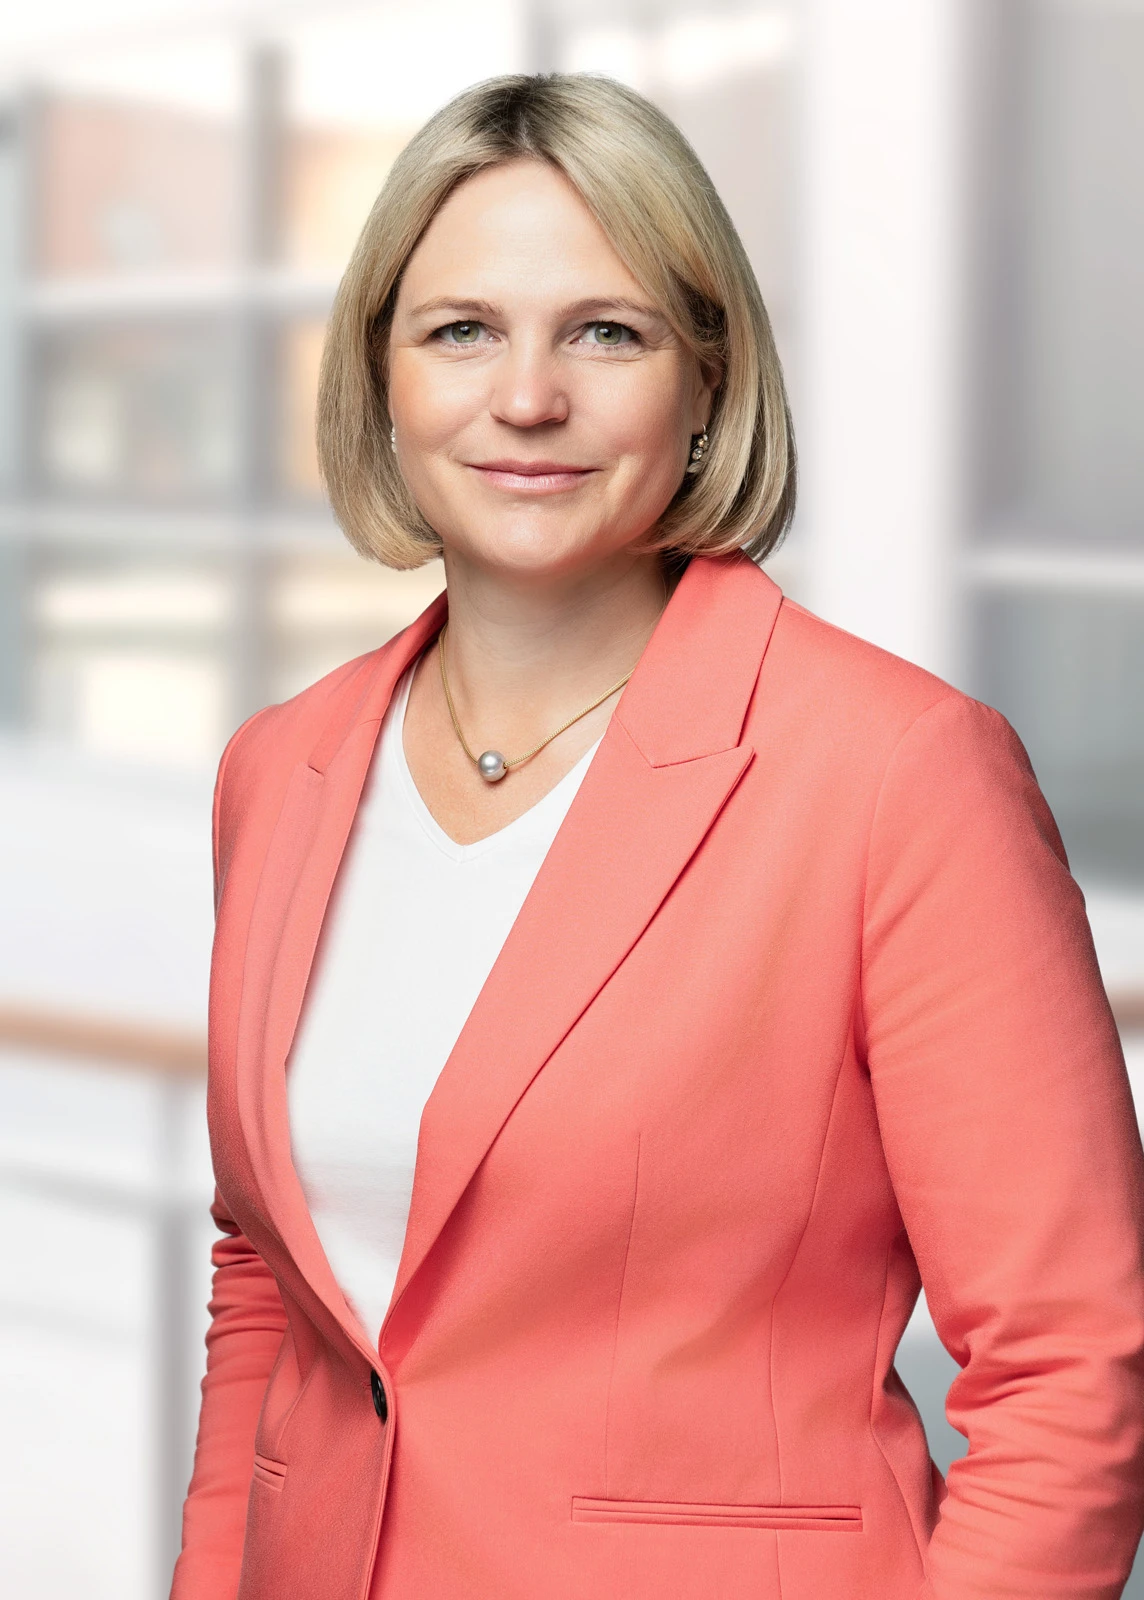 Annette Kröger, CEO, North & Central Europe, Allianz Real Estate